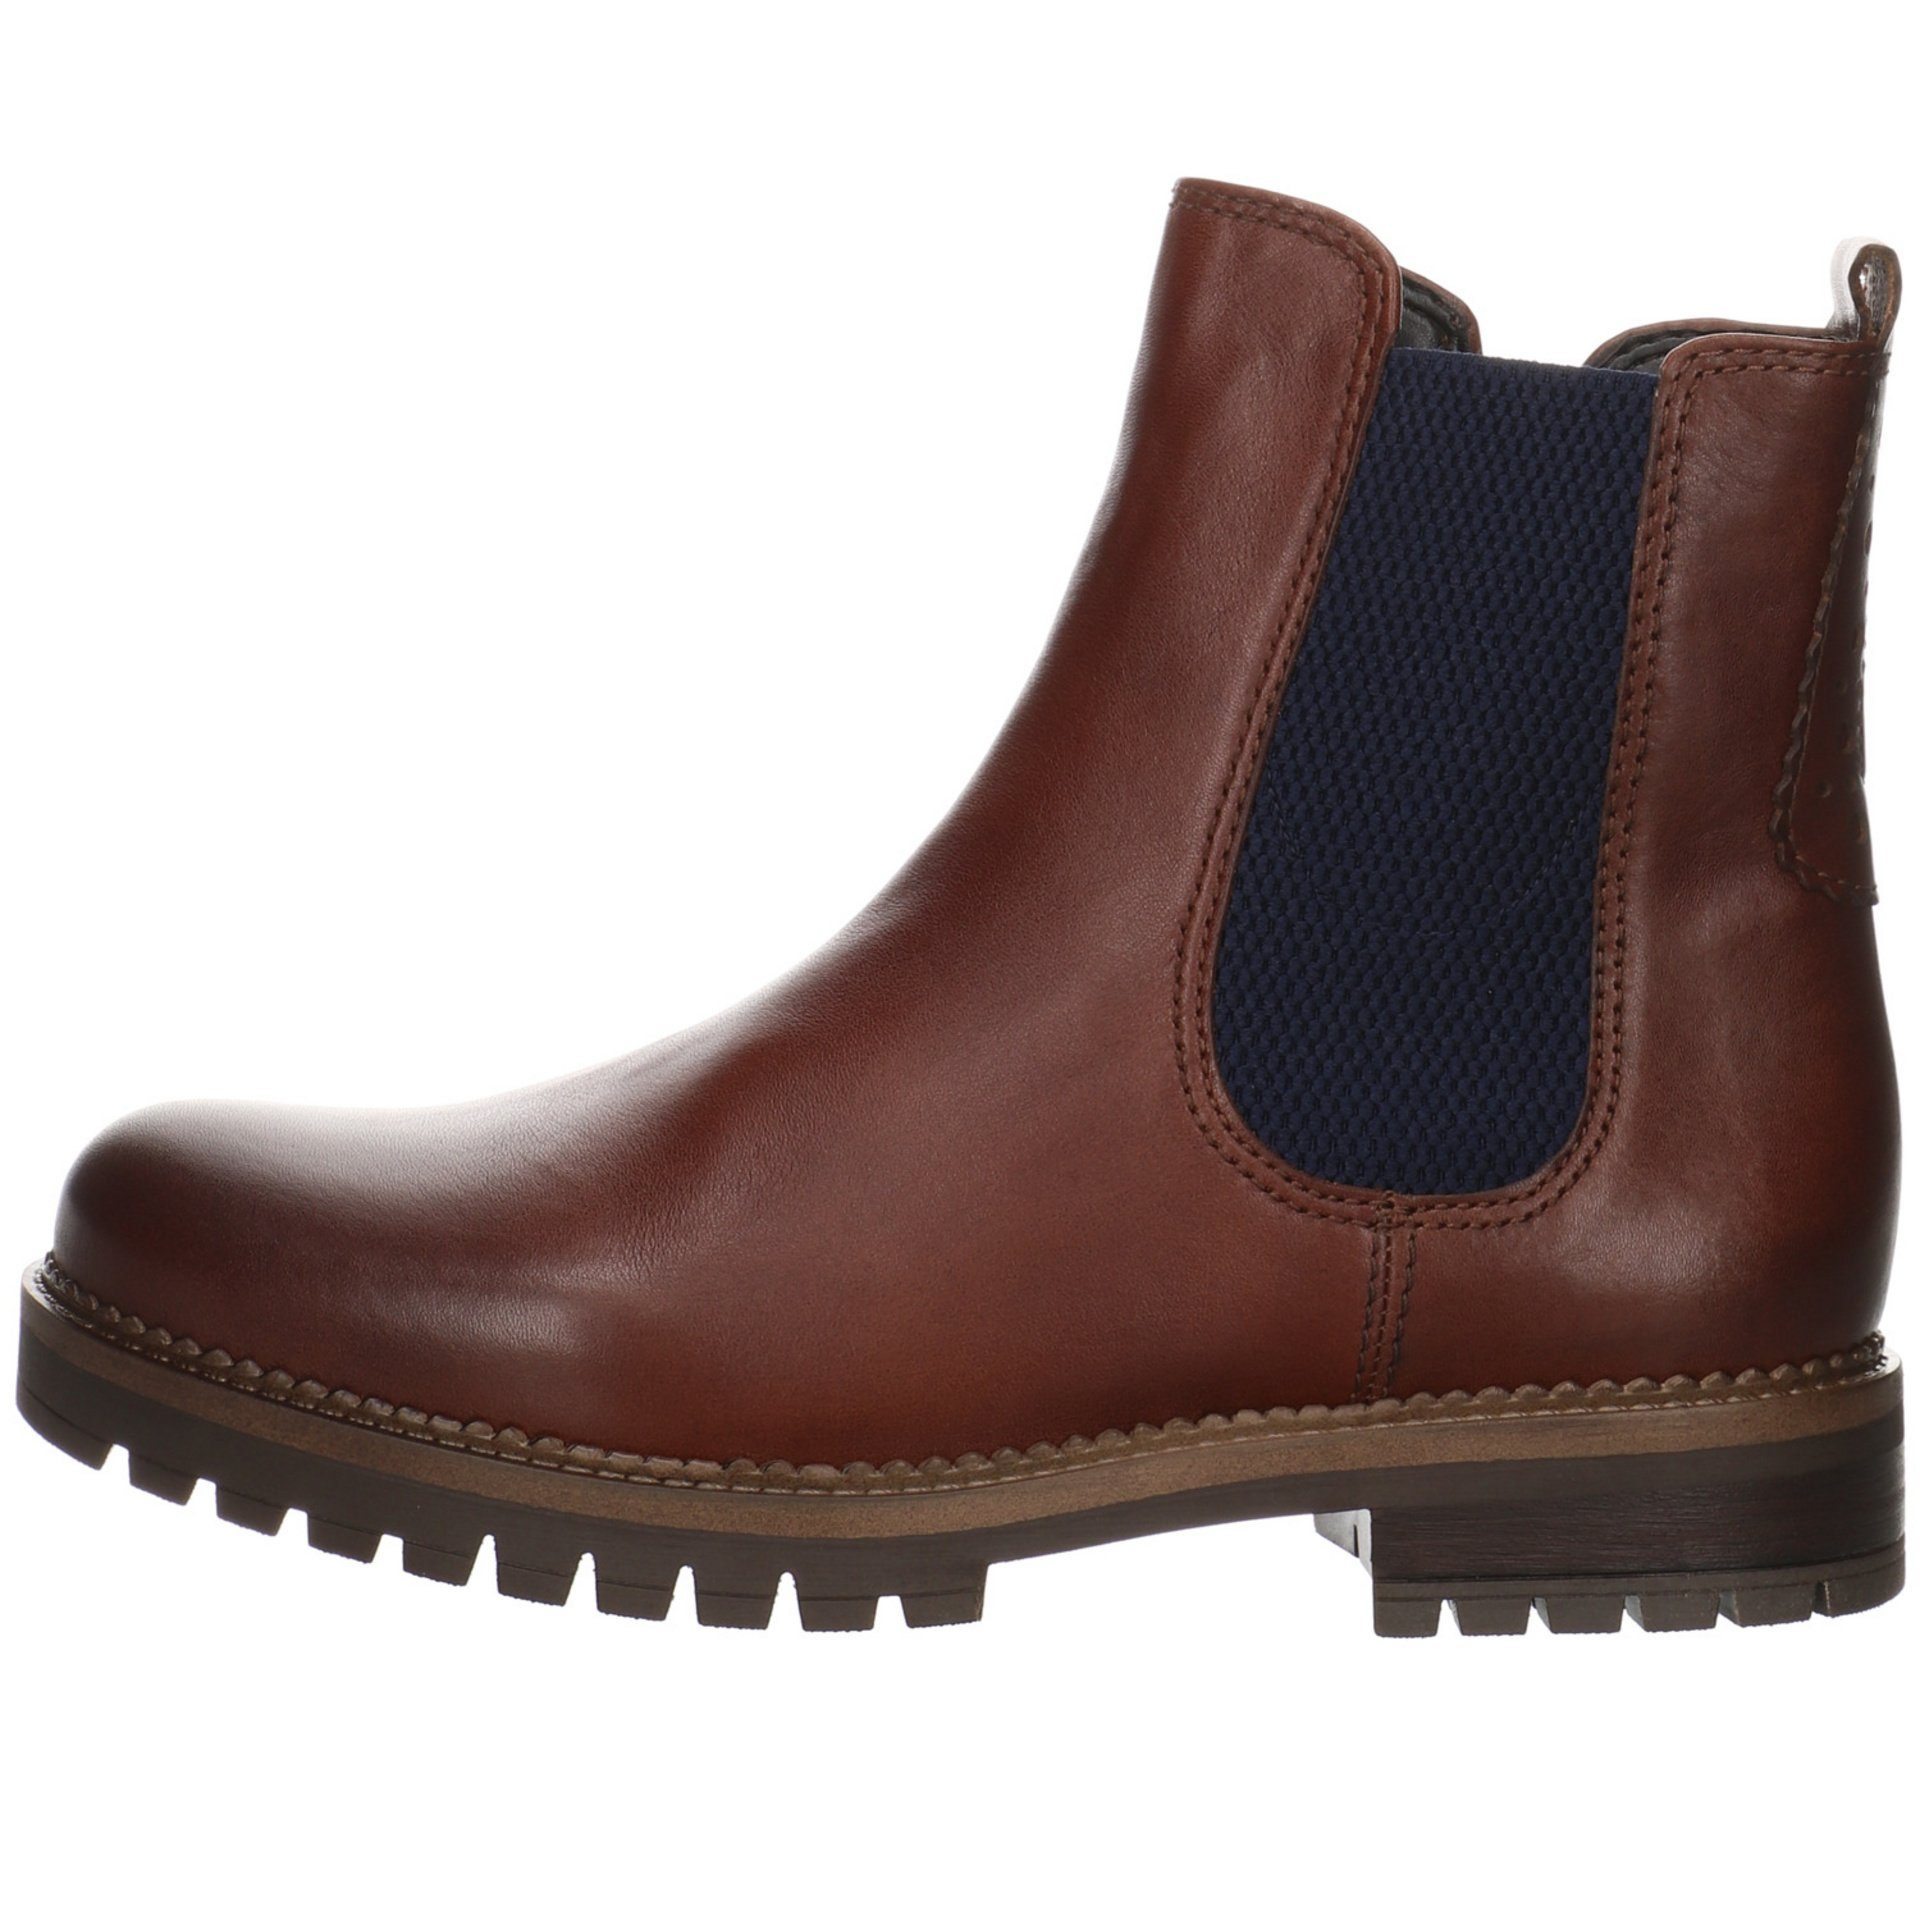 Stiefel Damen sattel Stiefel Boots Leder-/Textilkombination Gabor Schuhe (river) Chelsea